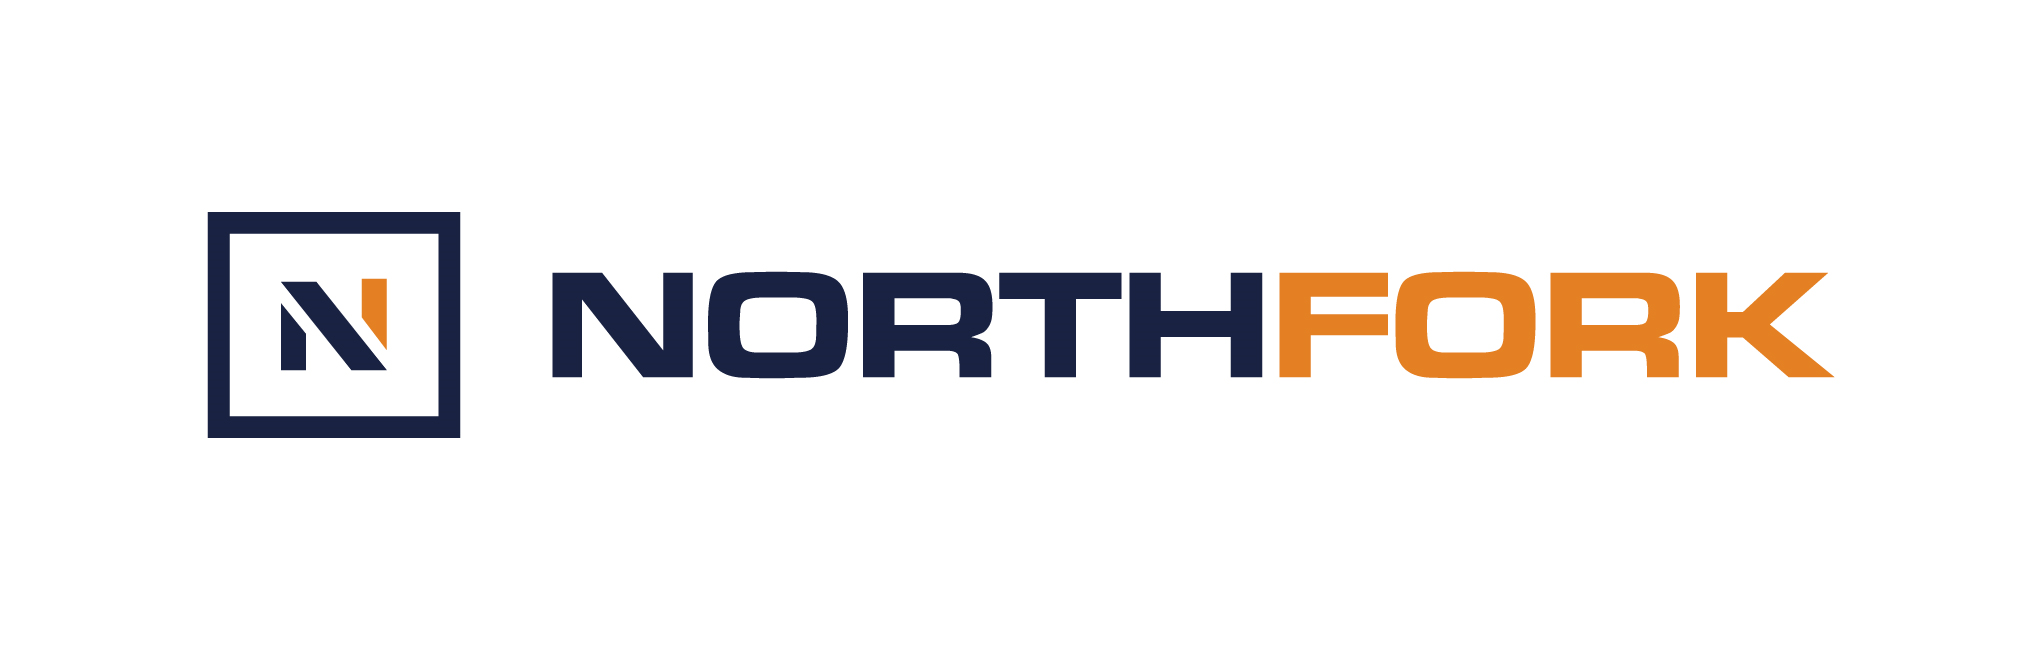 North Fork Builders logo